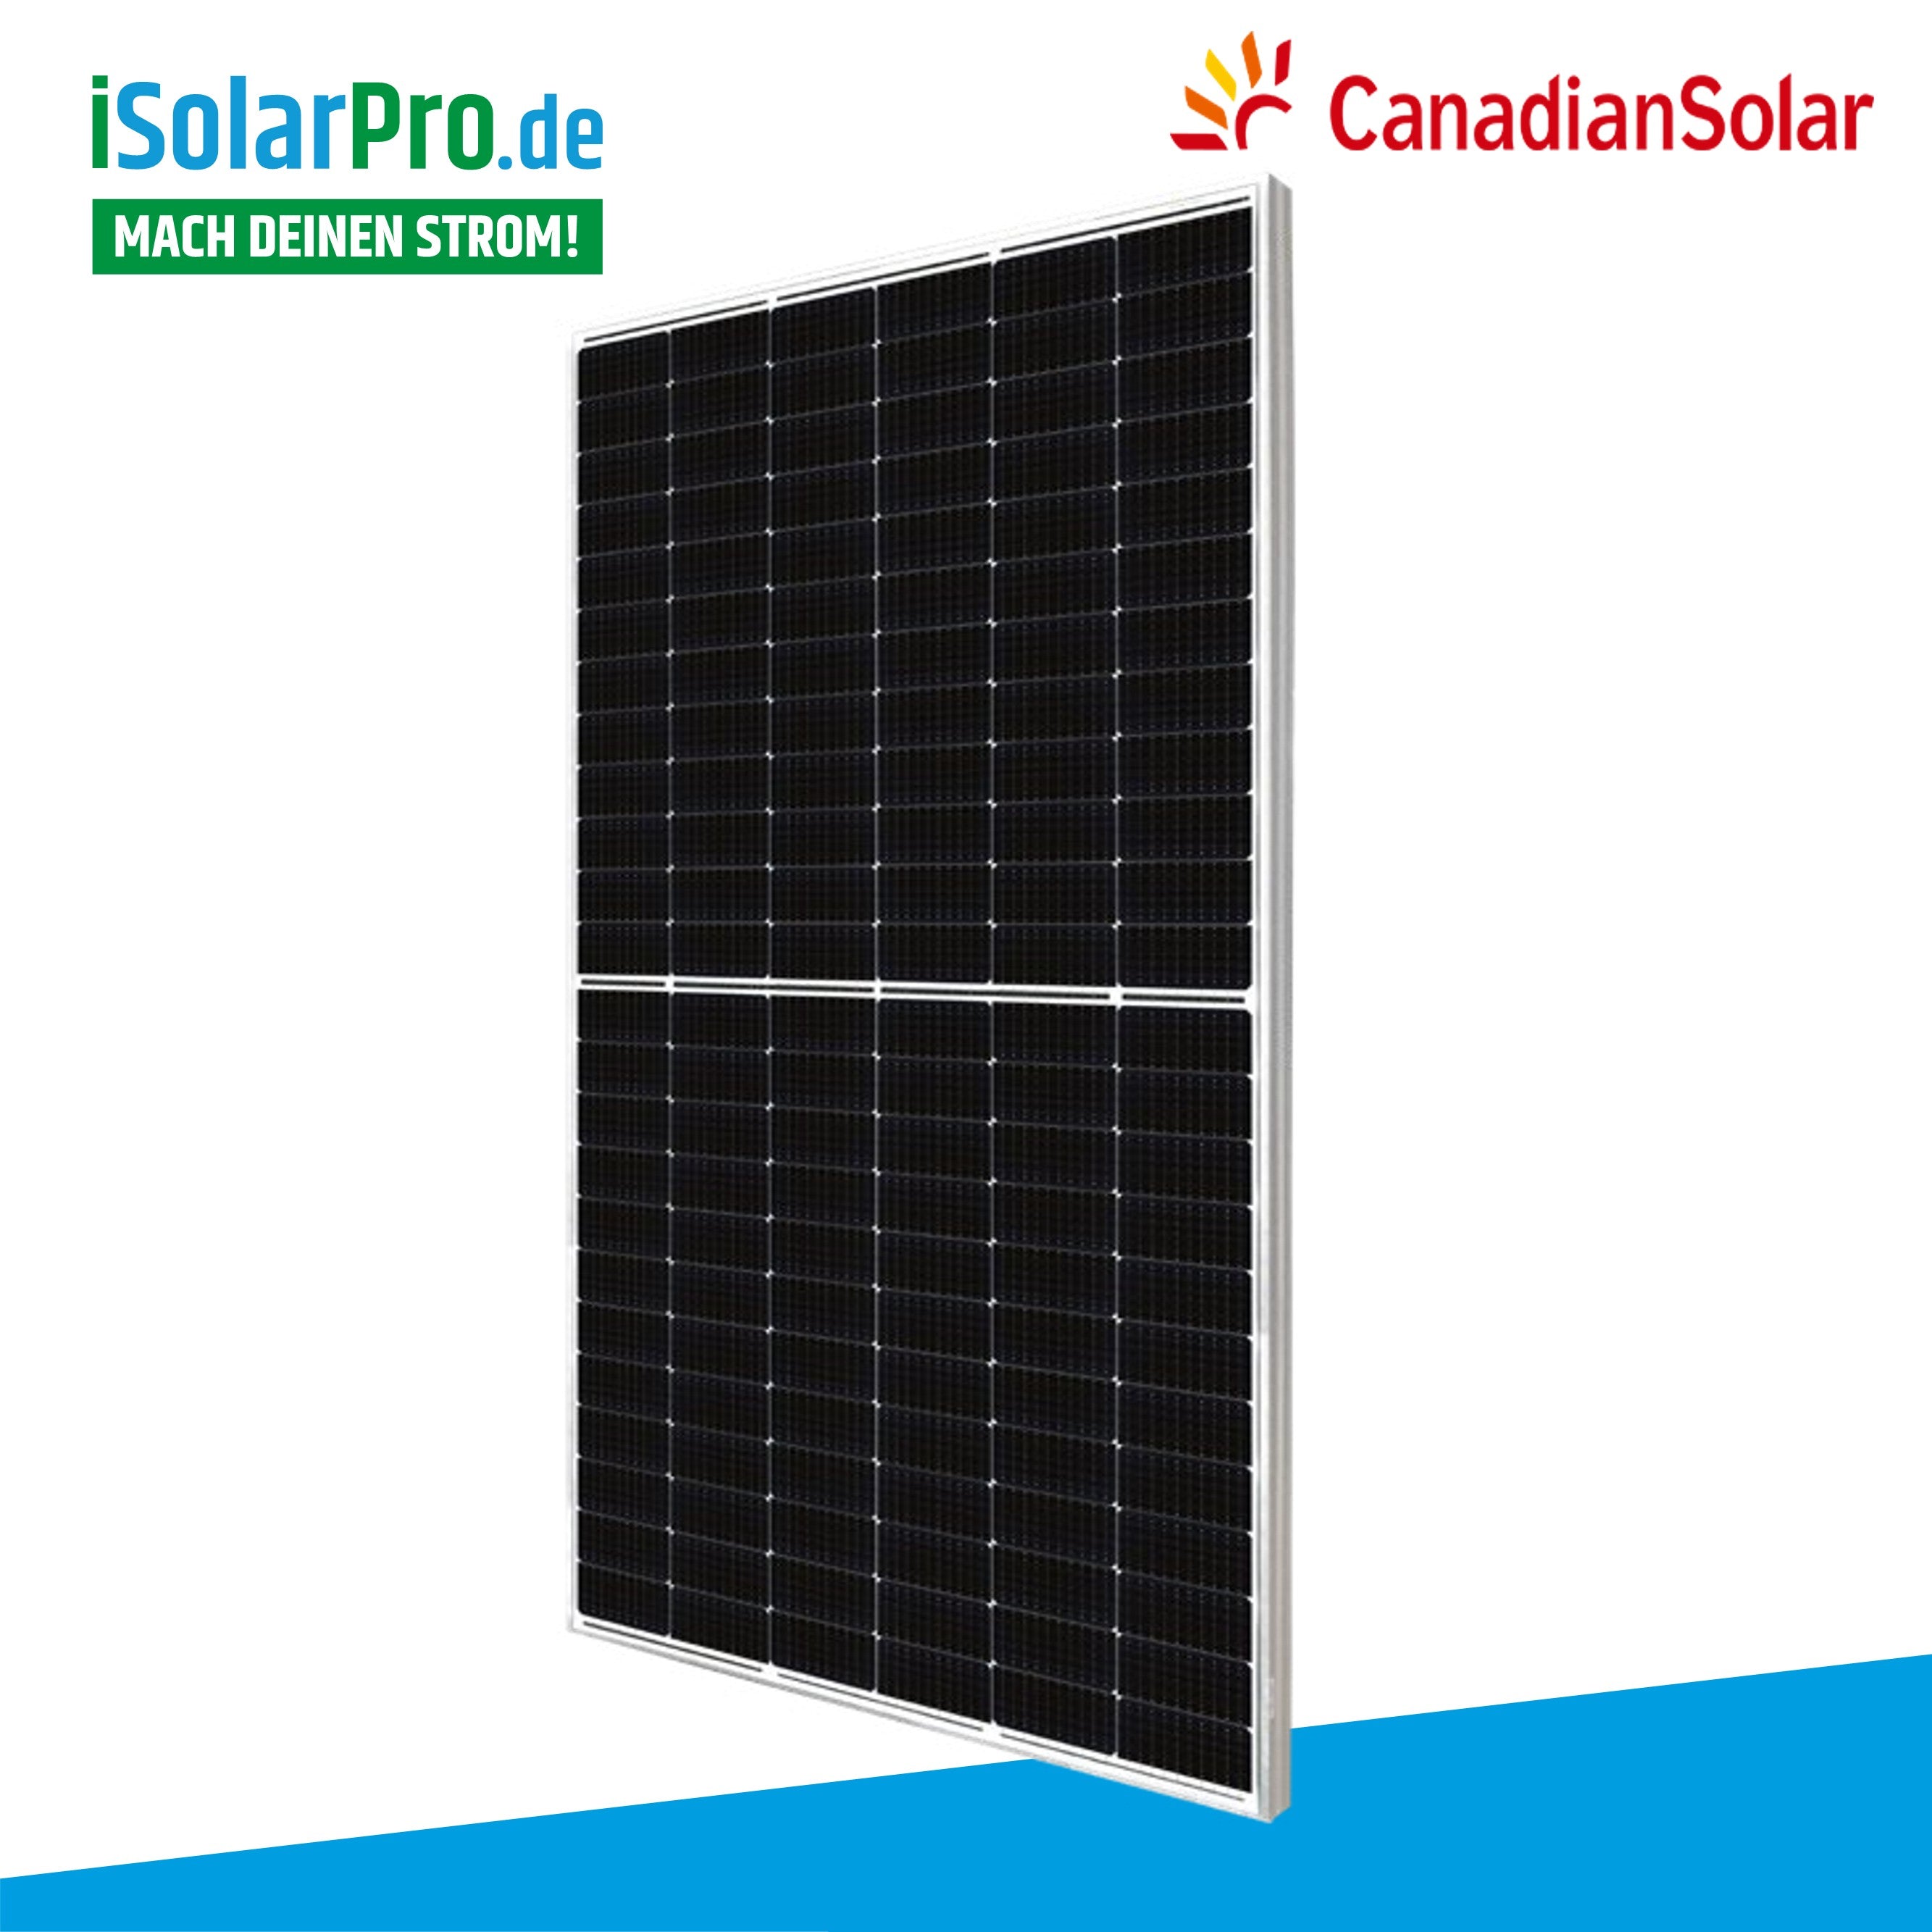 550W Canadian Solar HiKu6 Mono PERC Solarmodule 2261 ˣ 1134 ˣ 35 mm Solarpanel Photovoltaik